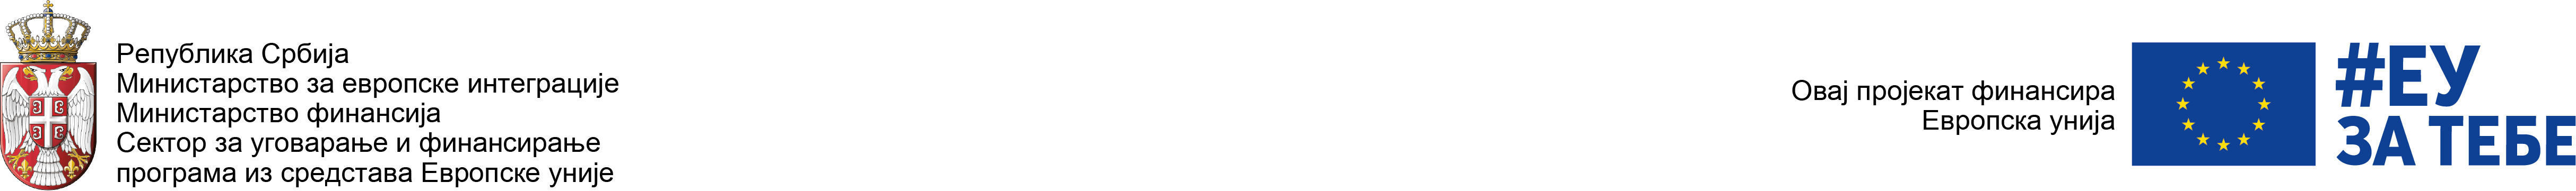 EU programi logo